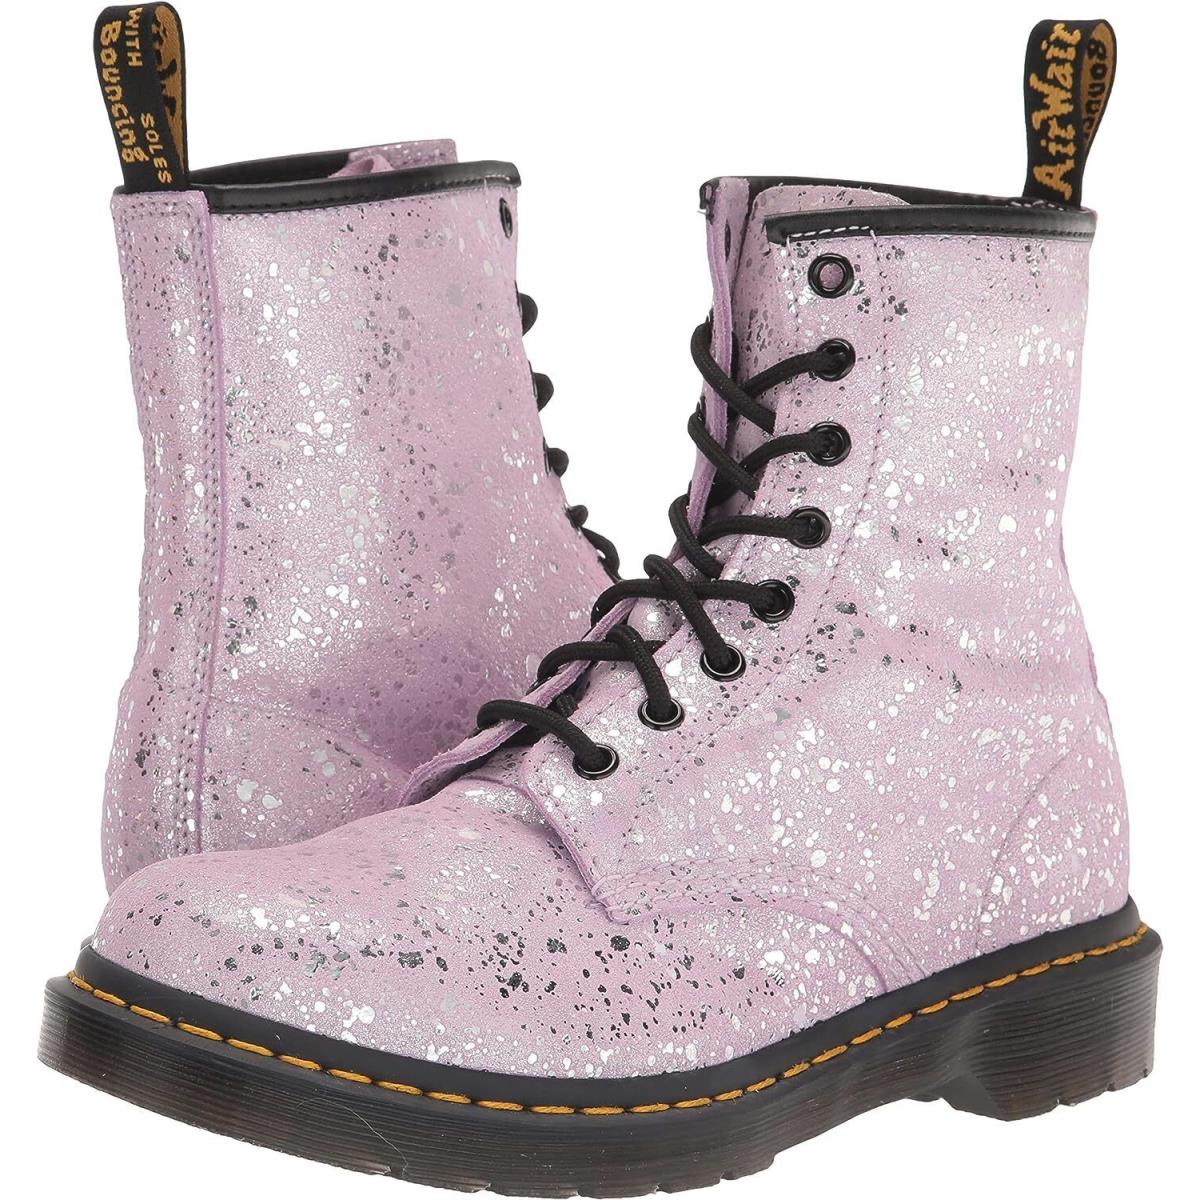 Womens Shoes Dr. Martens 1460 Metallic Paint Splatter Suede Boots 30770308 Lilac